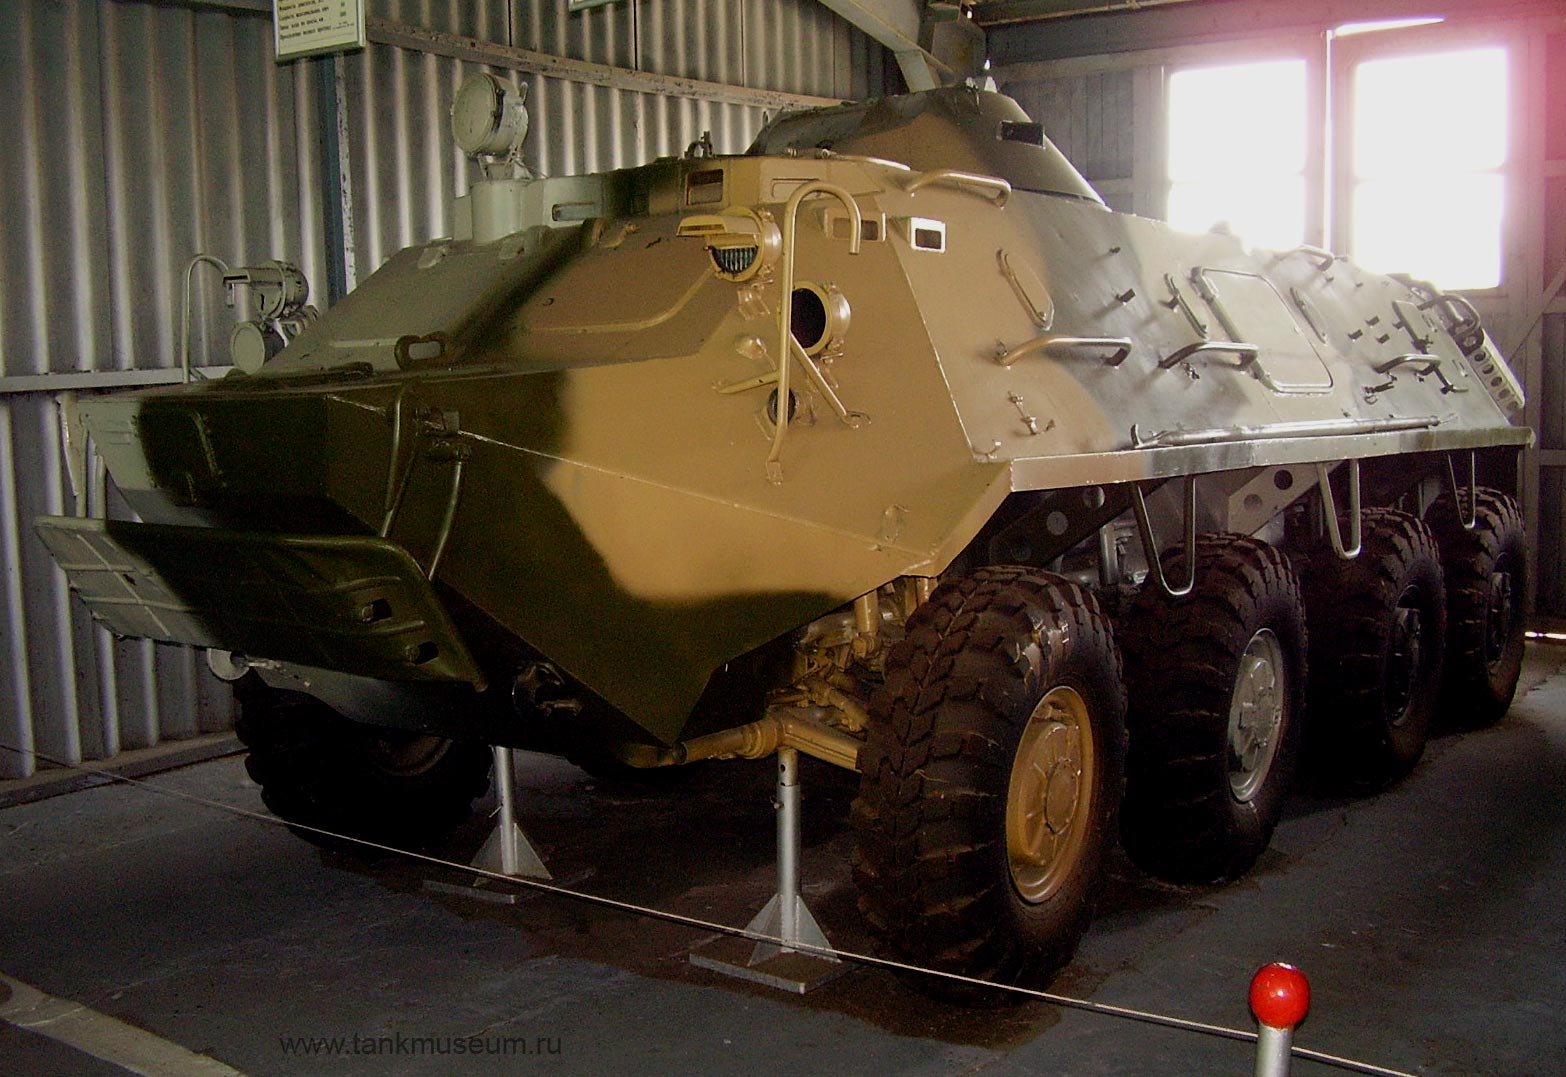 Kubinka tank museum Armored personnel carrier BTR-60PZ